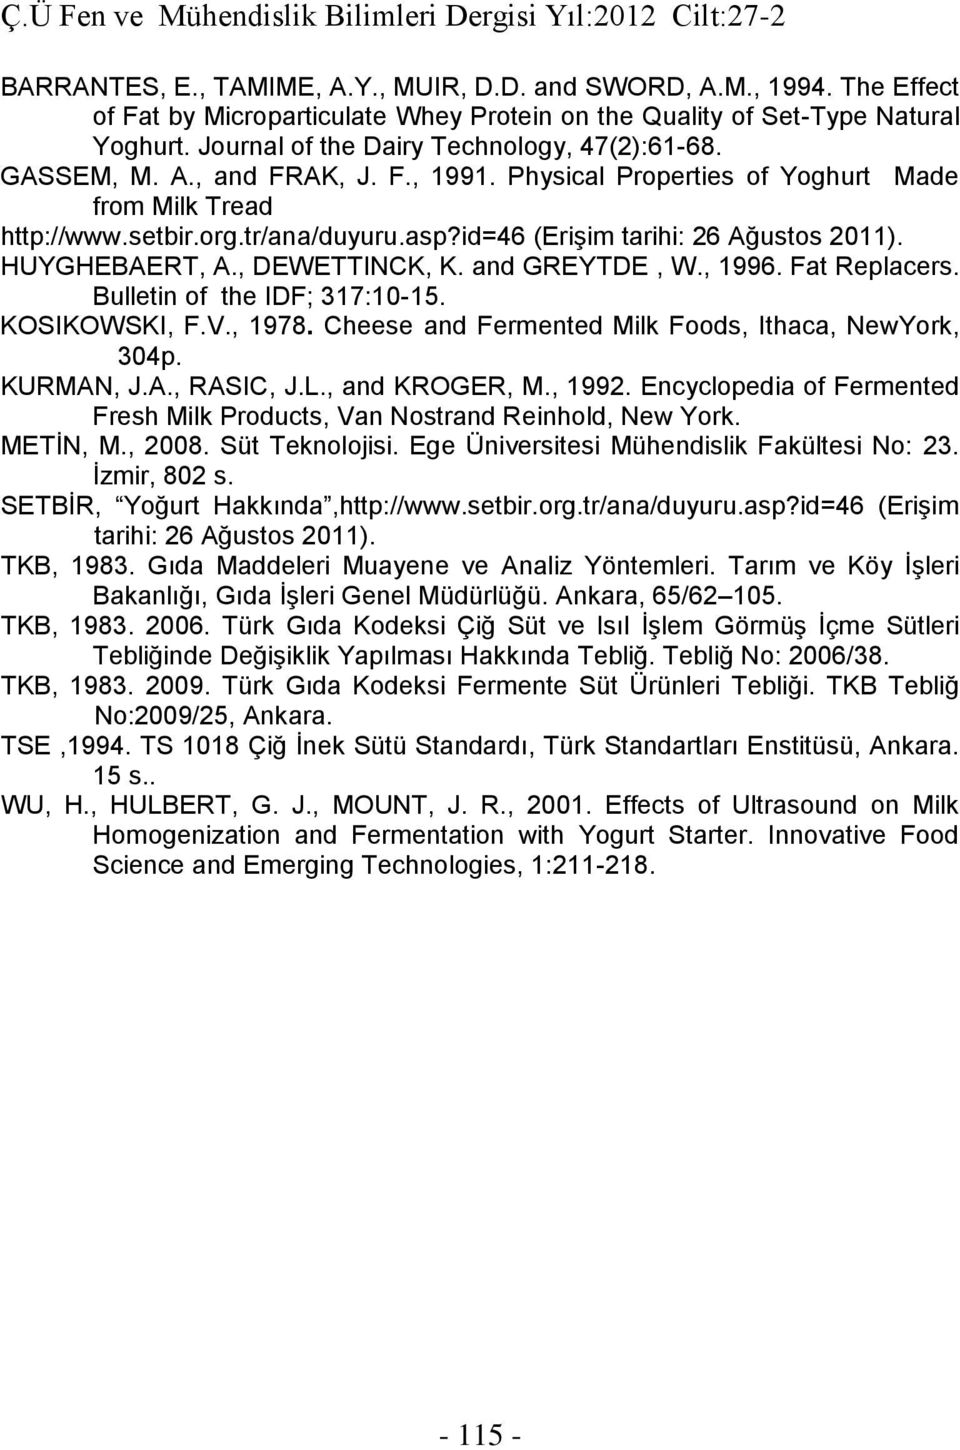 id=46 (Erişim tarihi: 26 Ağustos 2011). HUYGHEBAERT, A., DEWETTINCK, K. and GREYTDE, W., 1996. Fat Replacers. Bulletin of the IDF; 317:10-15. KOSIKOWSKI, F.V., 1978.